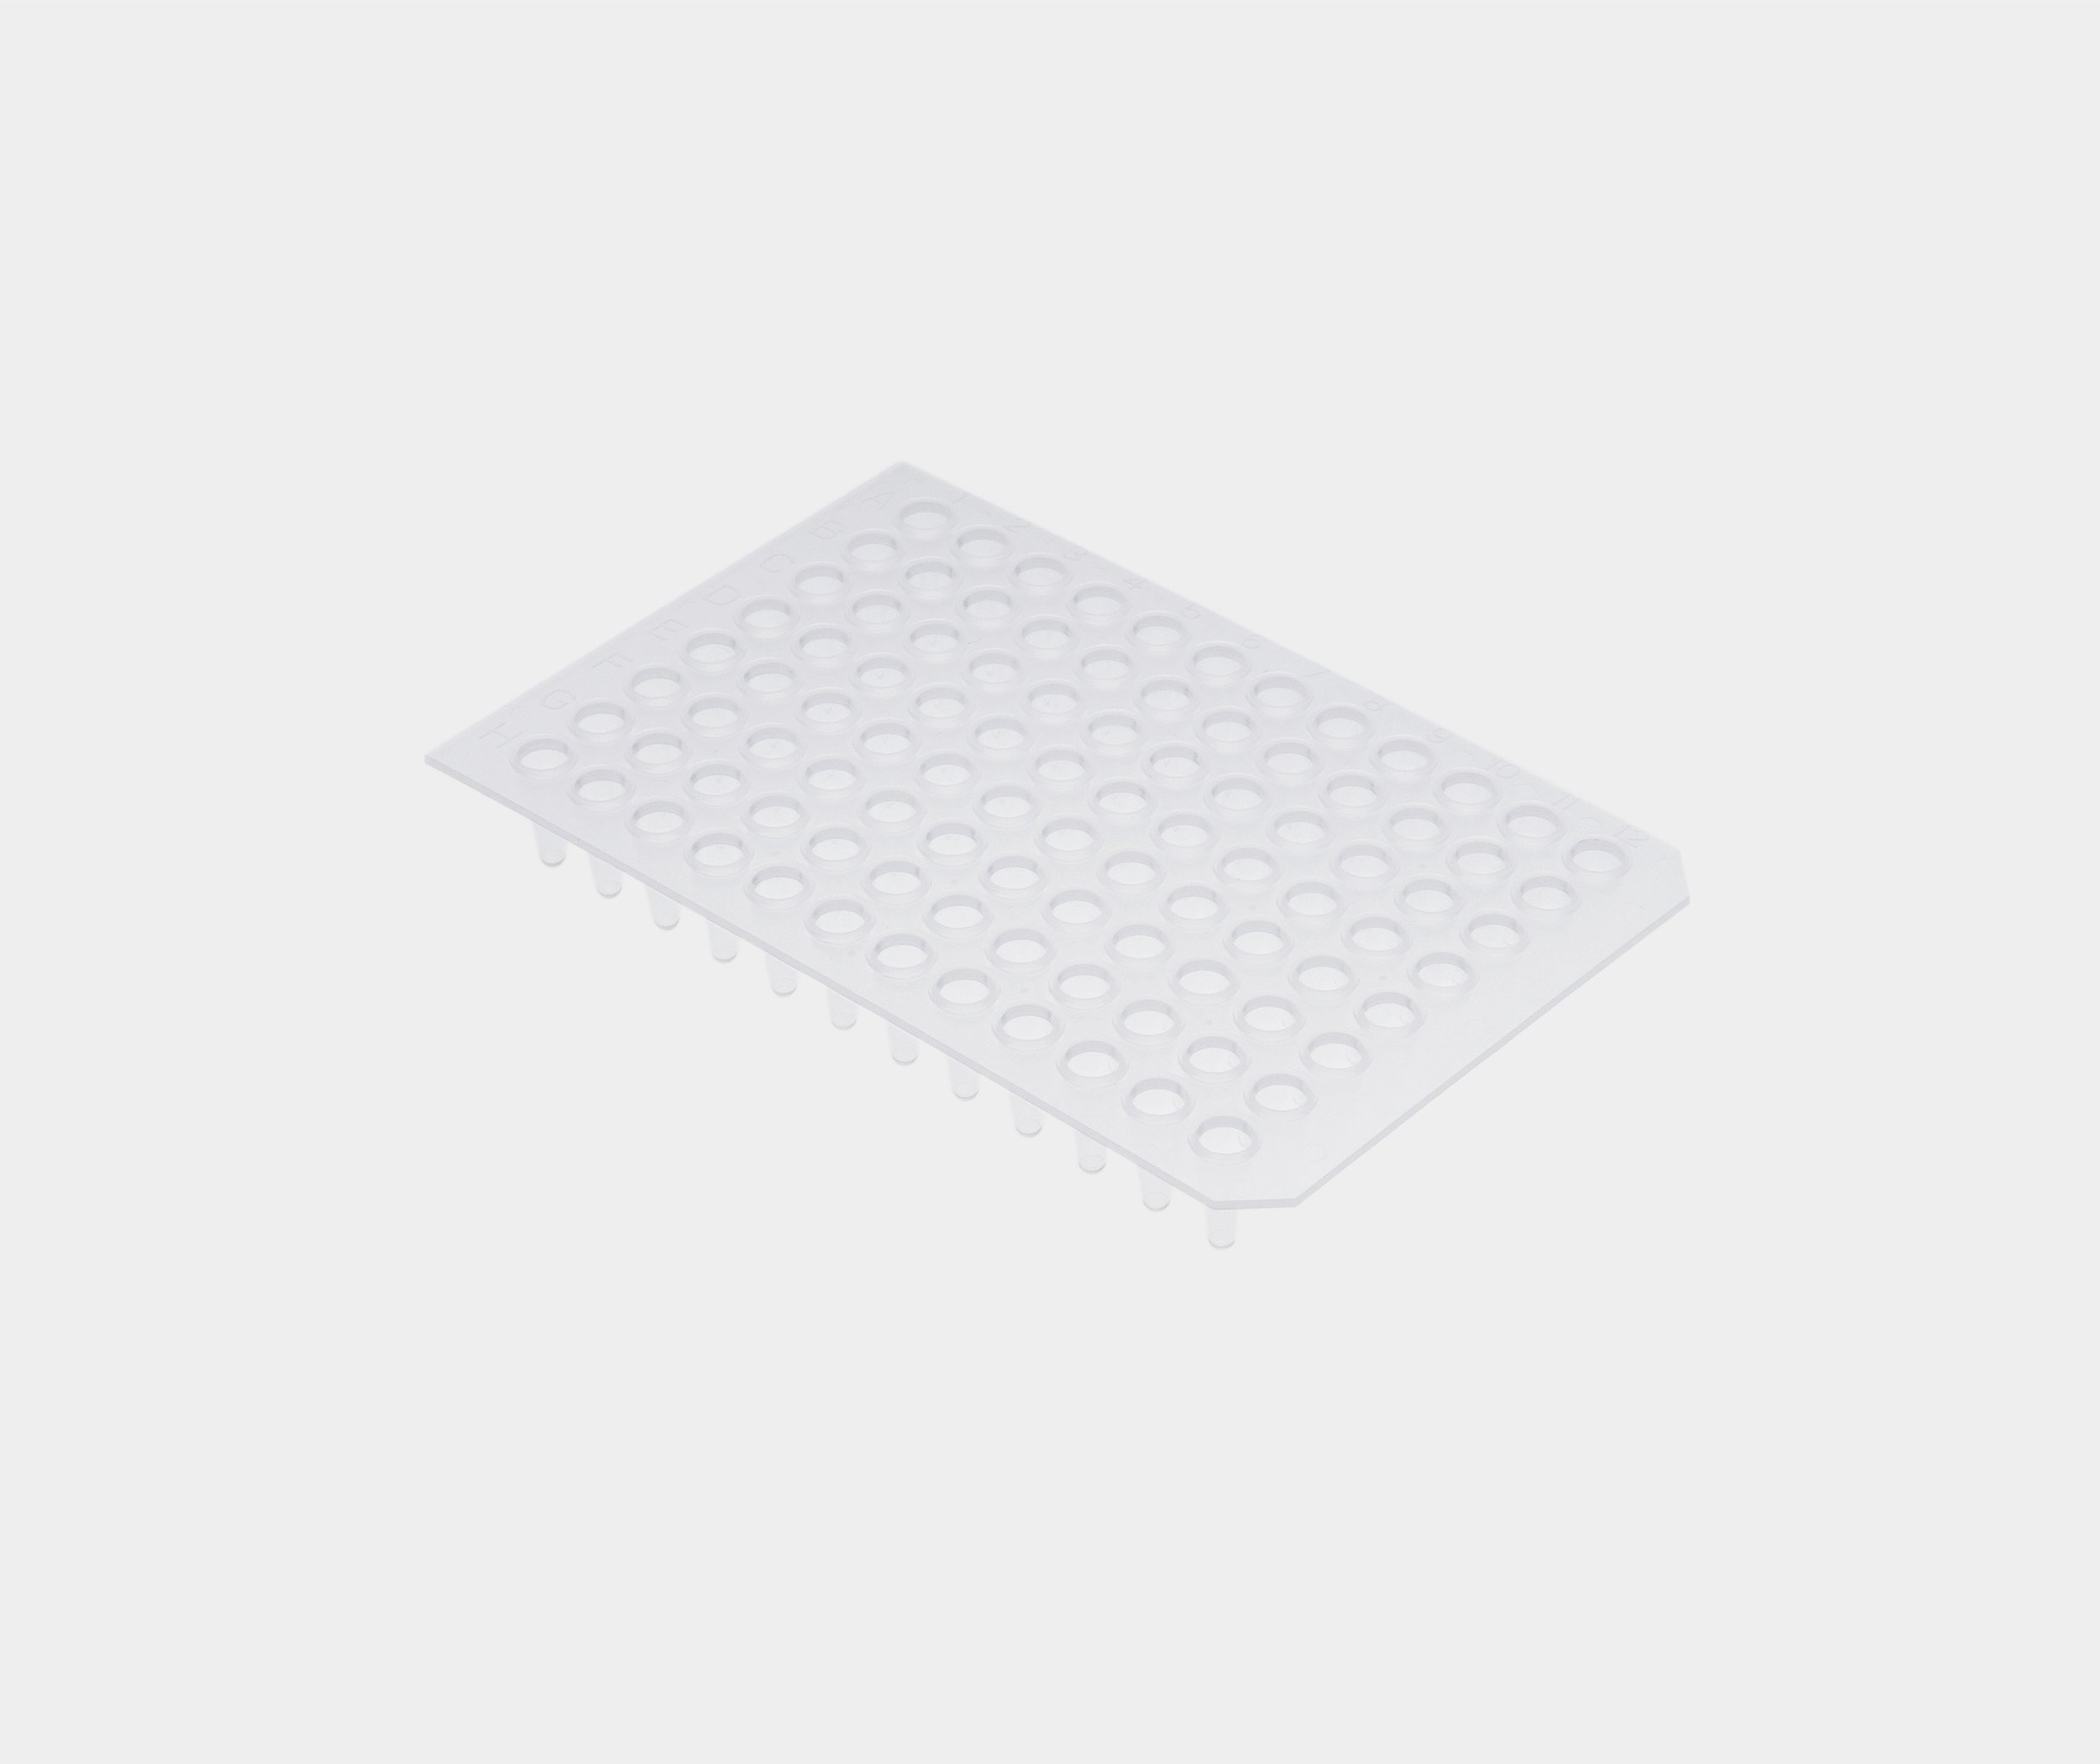 96Well 0.1ml Transparent No Skirt PCR Plate